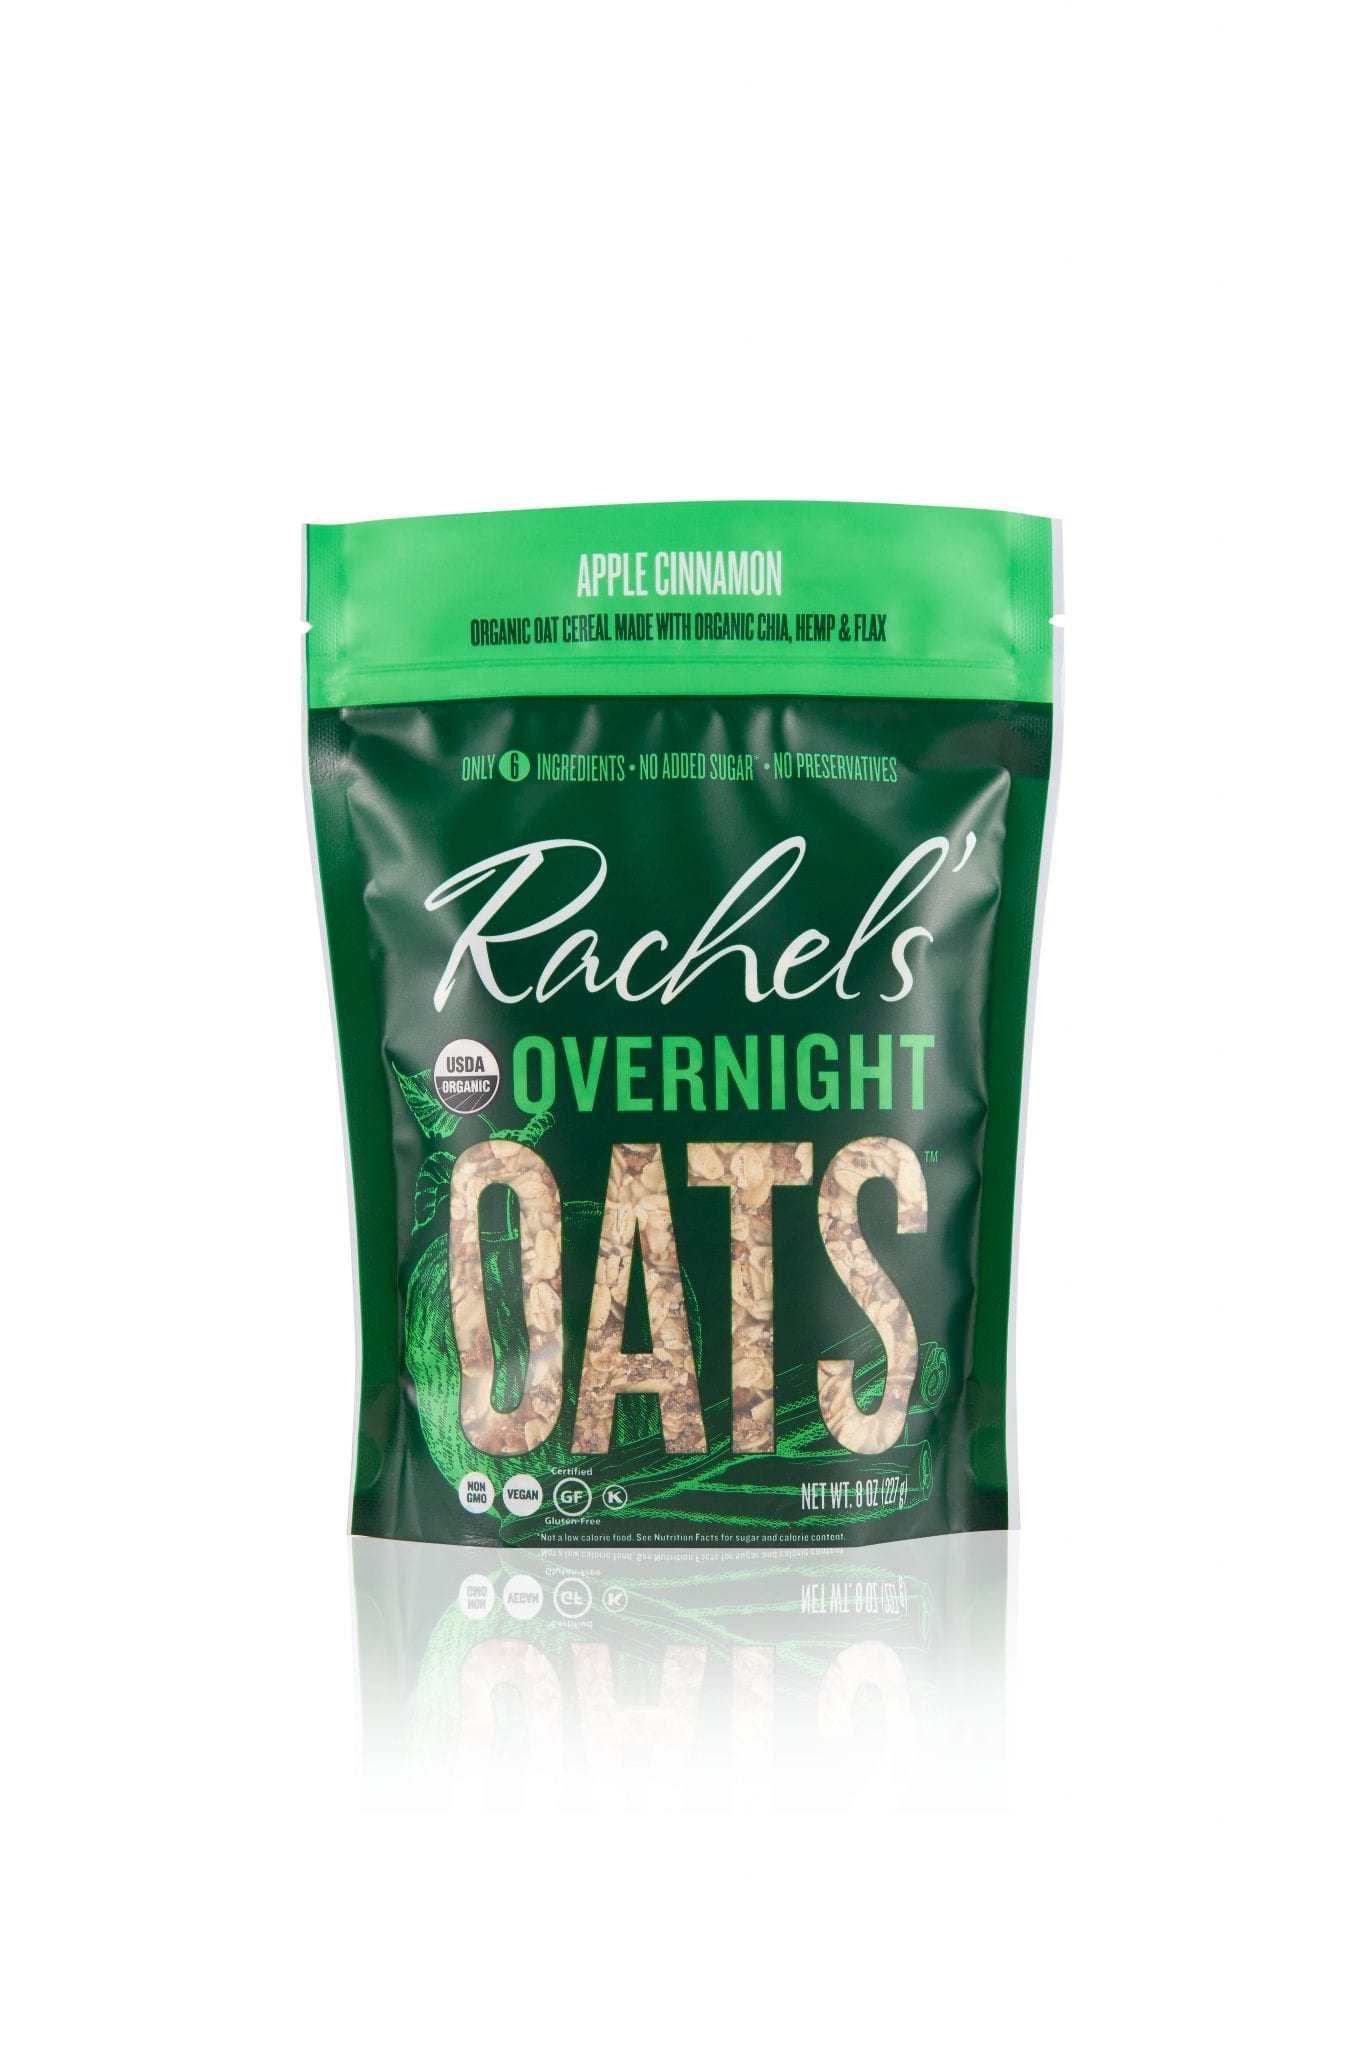 Apple and Cinnamon Rachel Overnight oats in bag